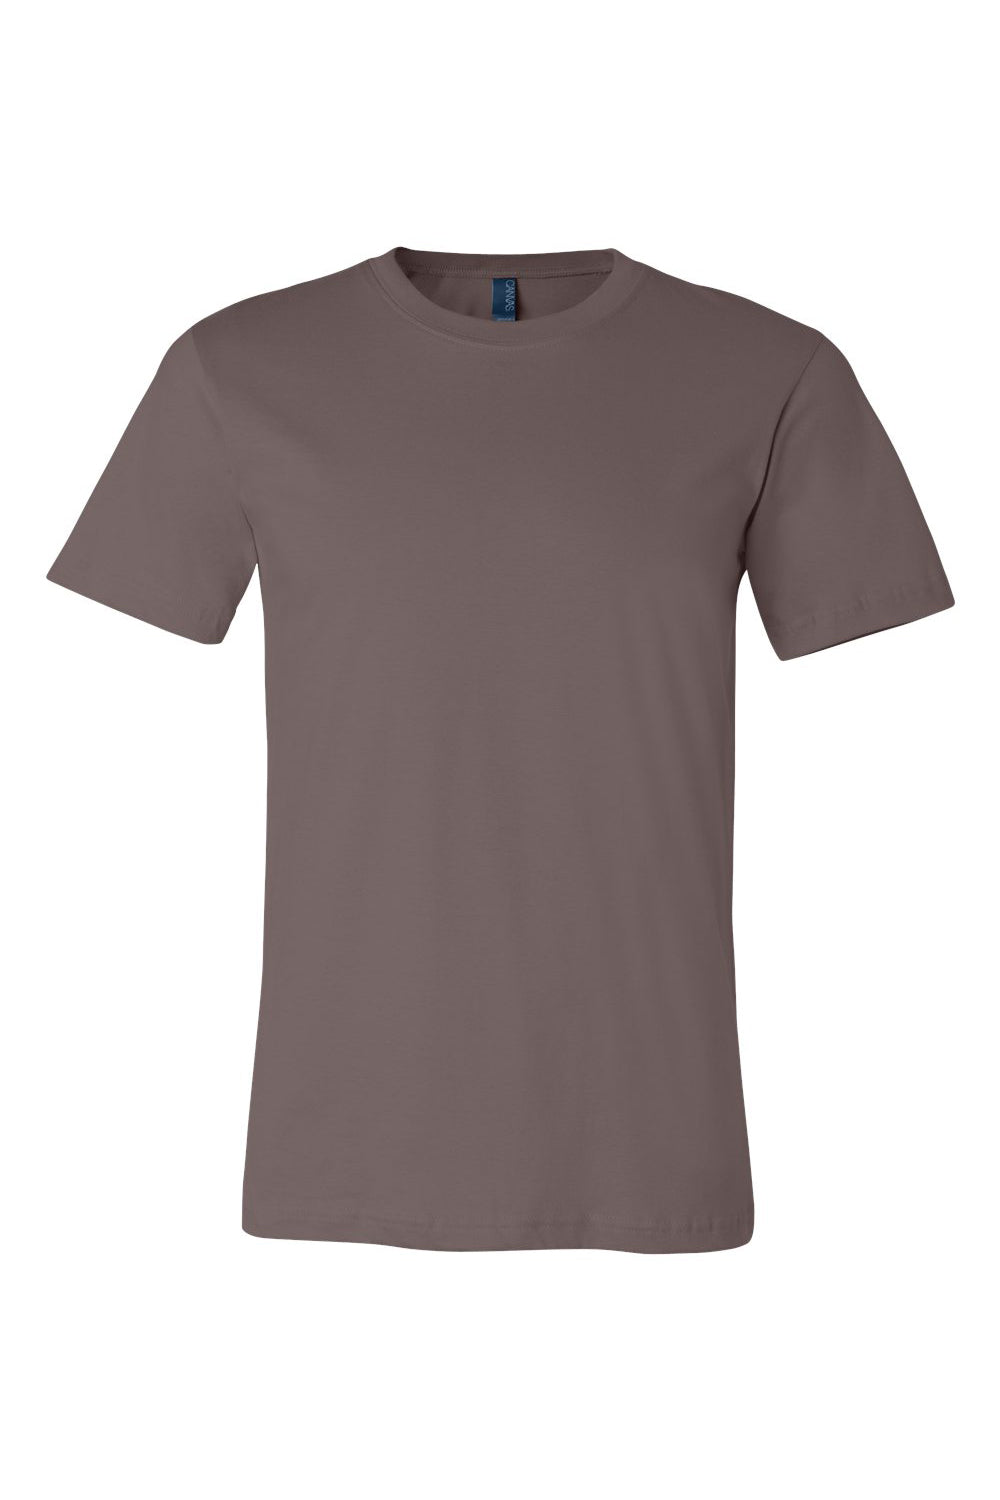 Bella + Canvas BC3001/3001C Mens Jersey Short Sleeve Crewneck T-Shirt Pebble Flat Front